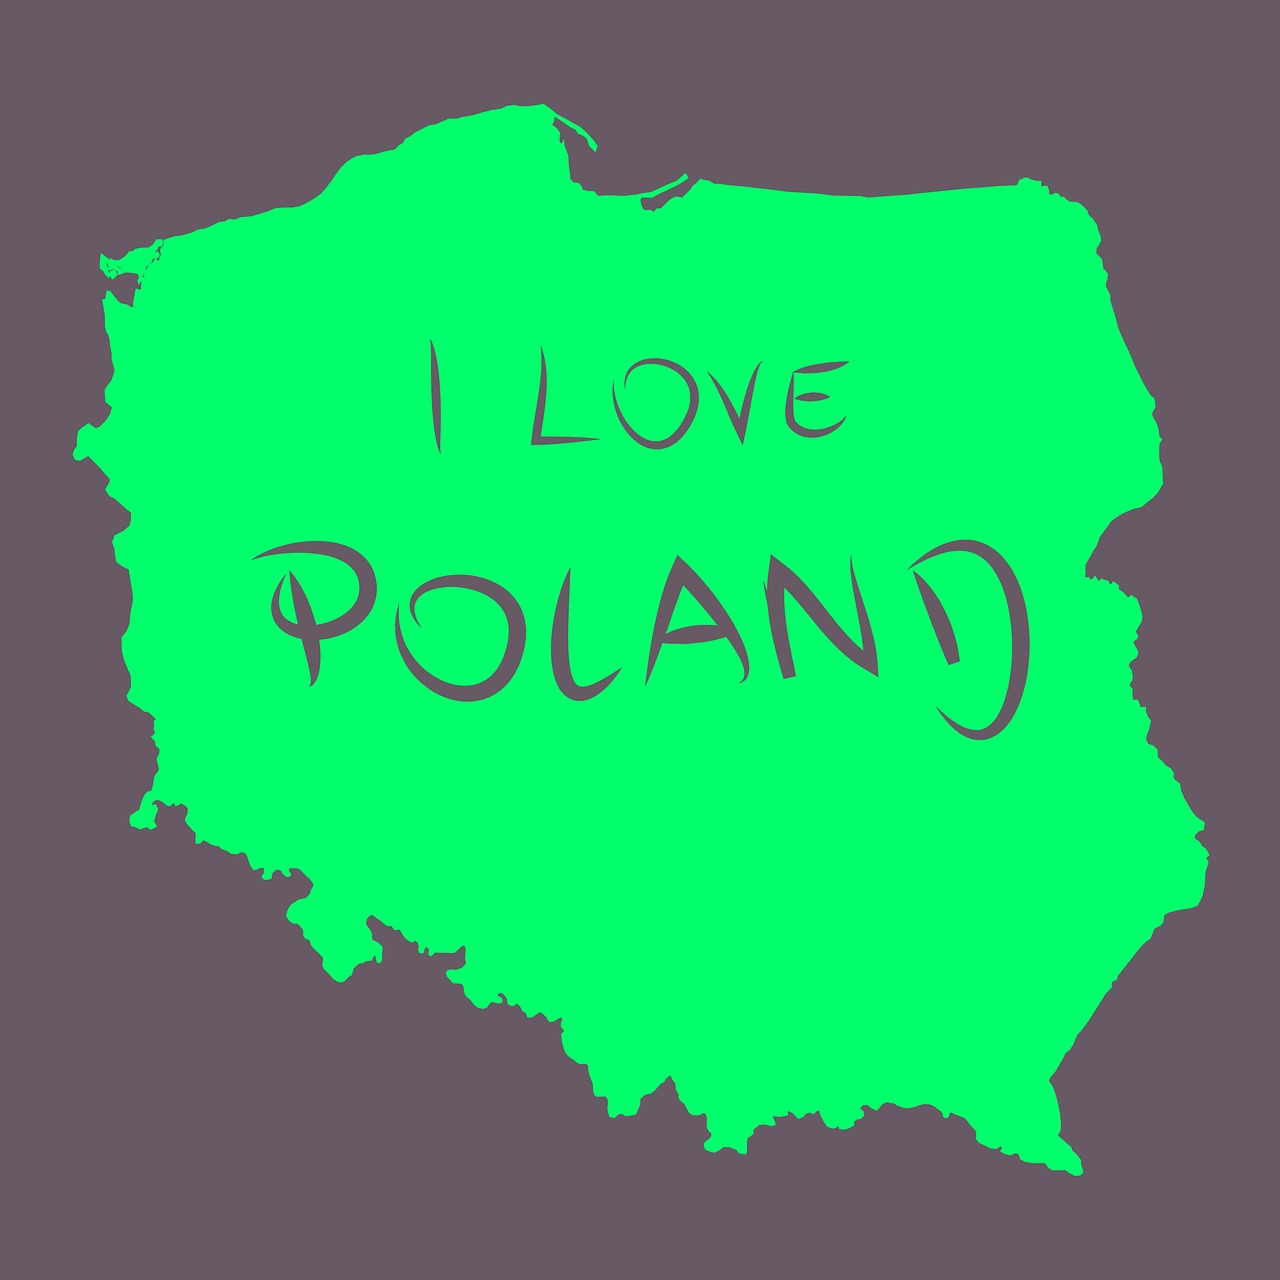 poland map of poland country free photo